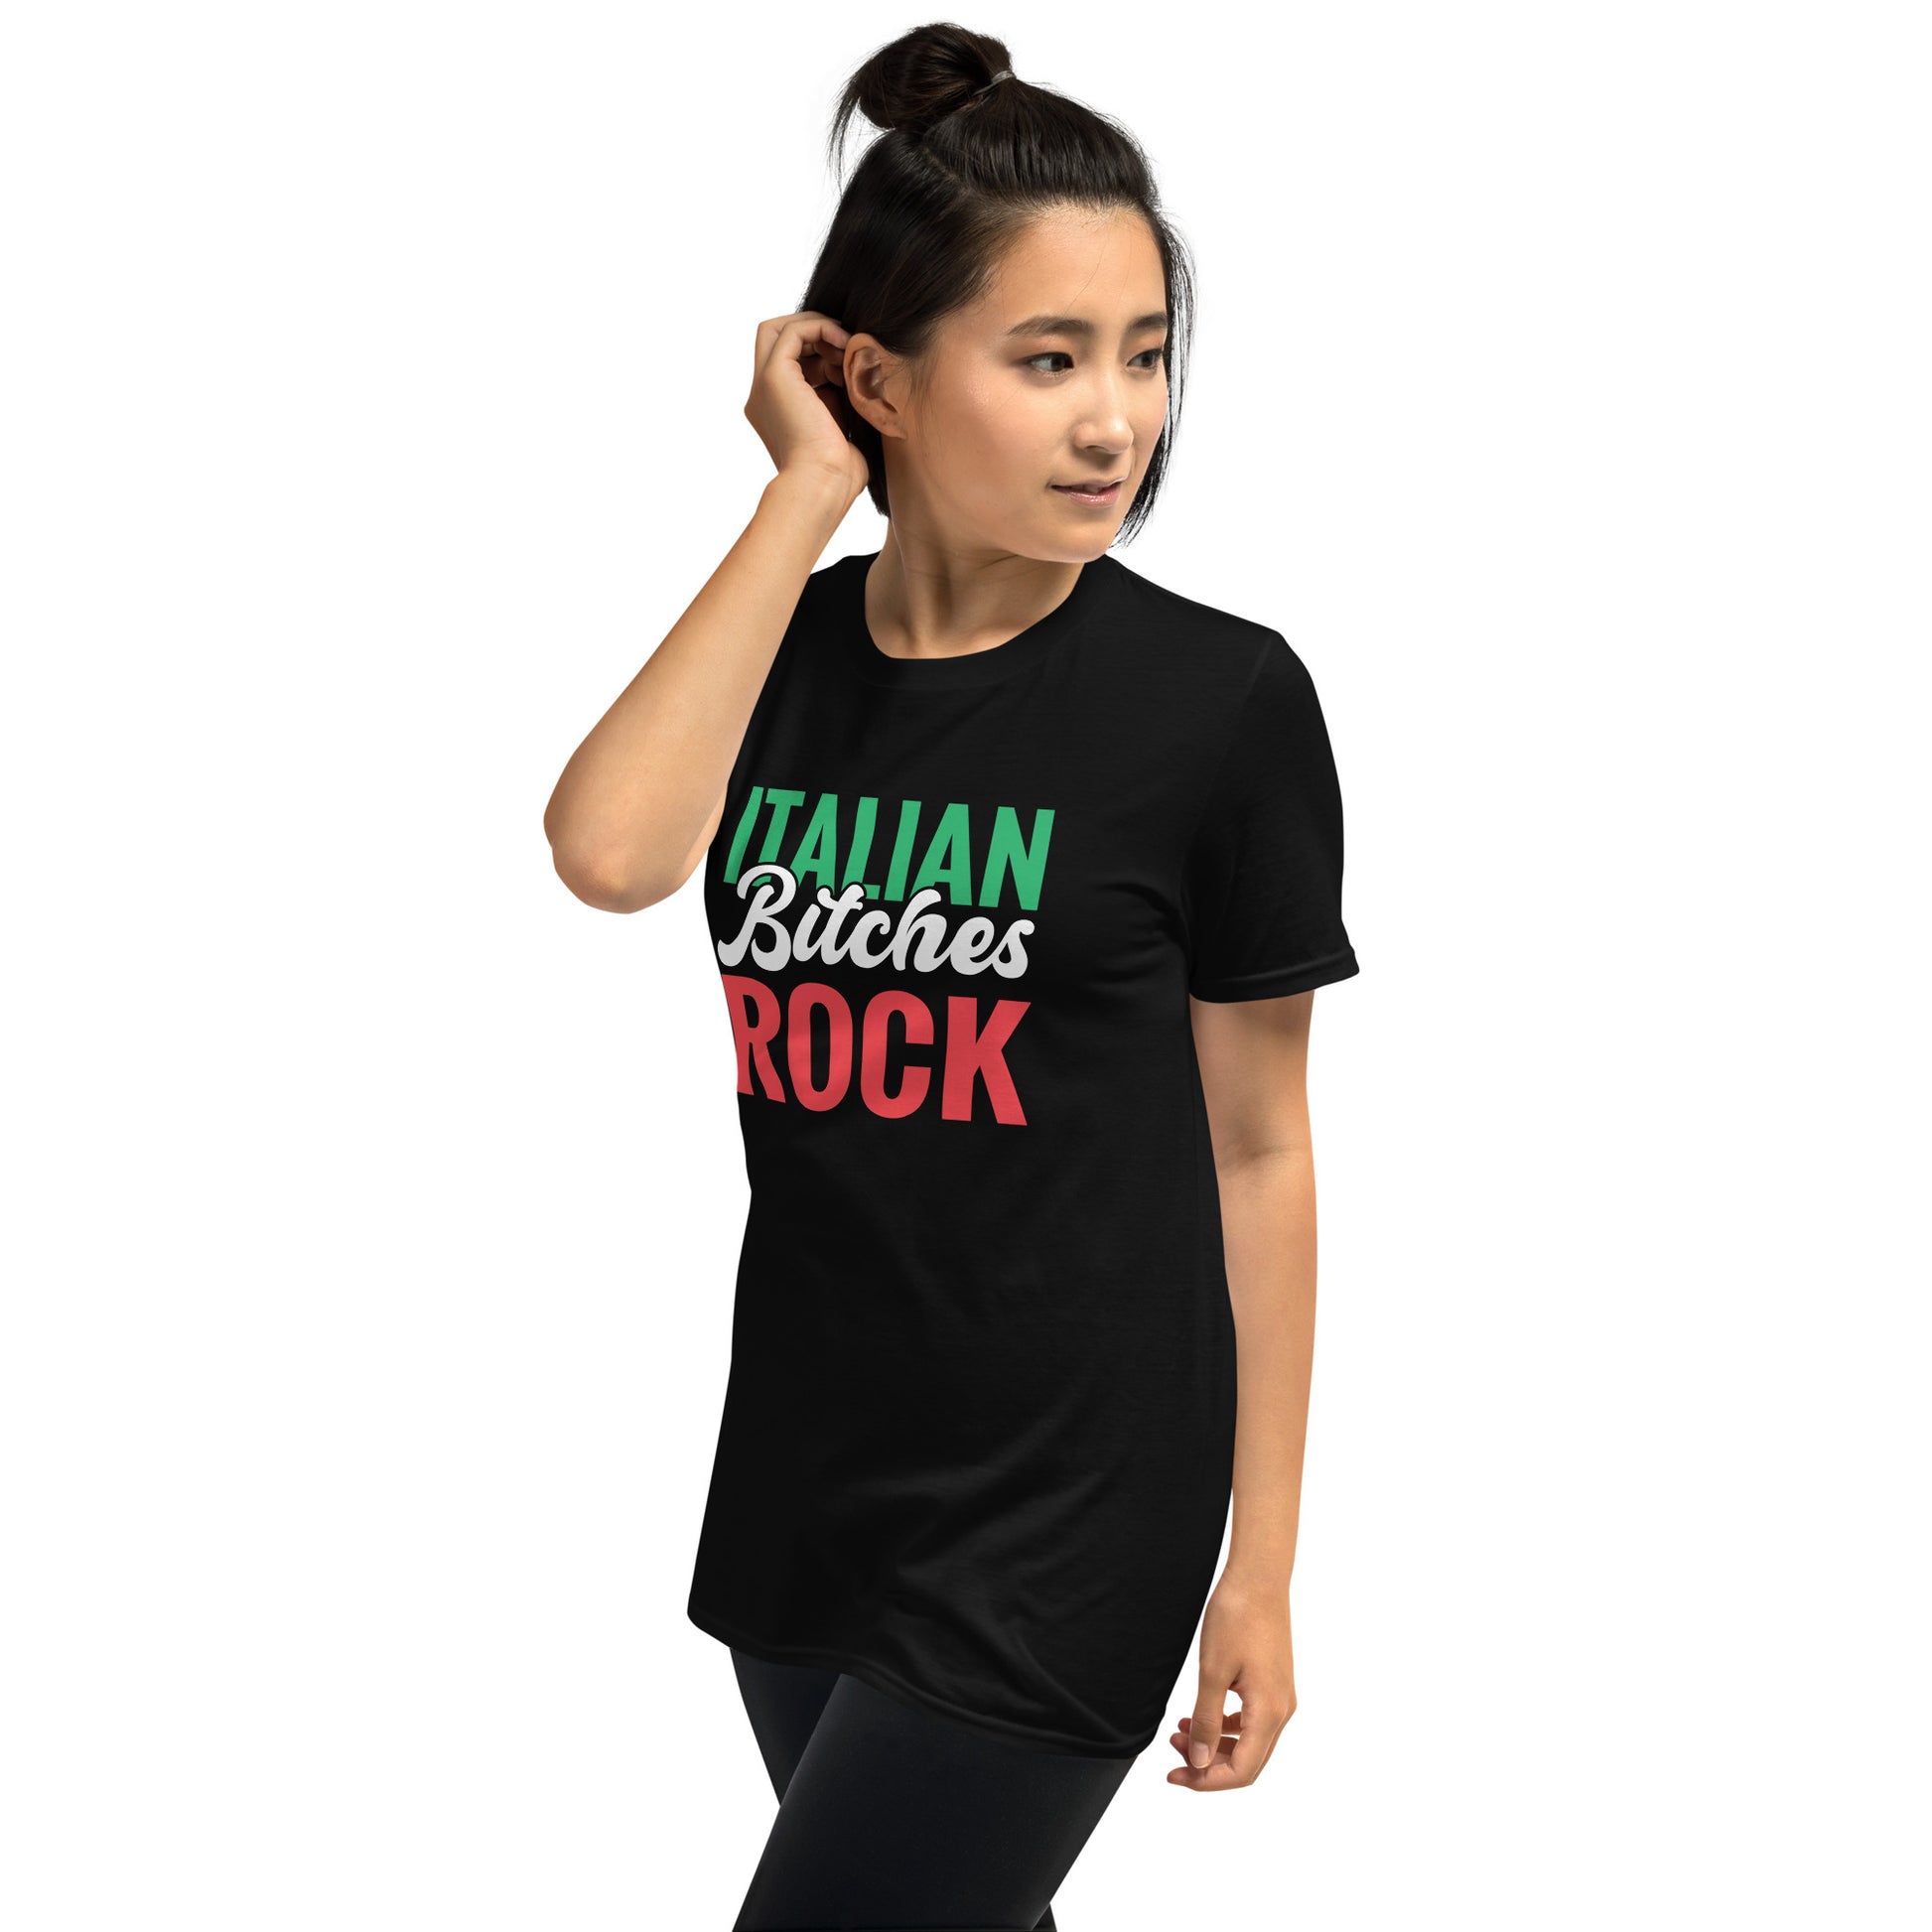 Italy T shirt / Italian Bitches Rock Tshirt